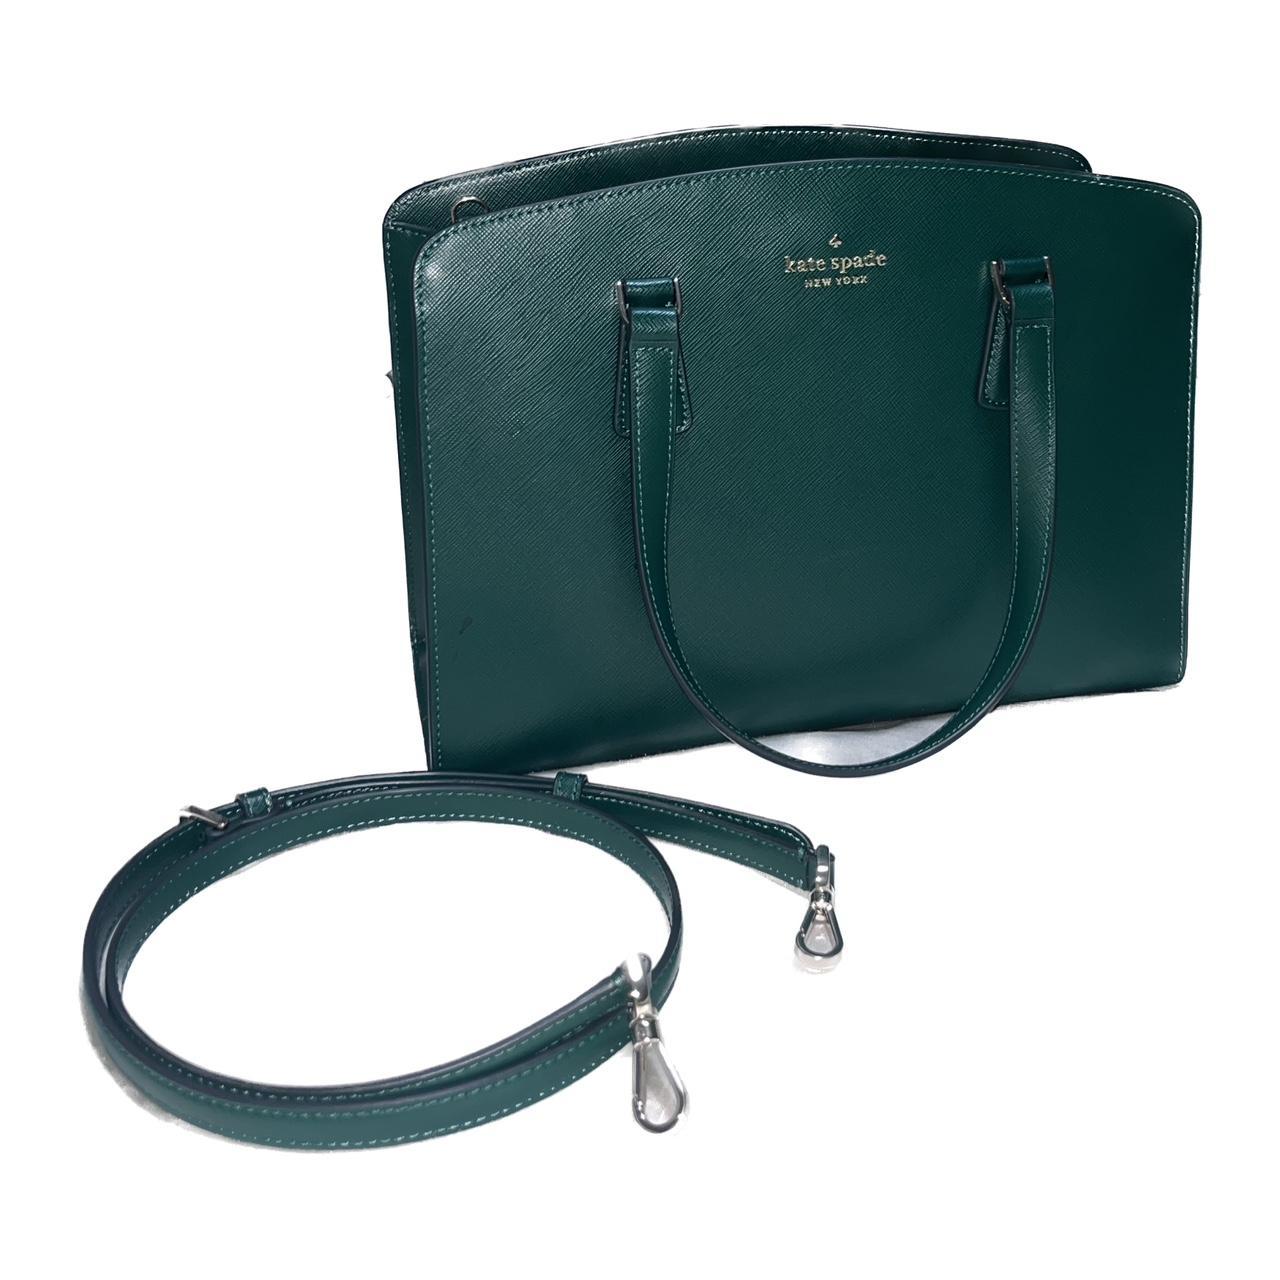 Kate Spade New York Glimmer Glitter Oval Camera Crossbody Bag Festive Teal:  Handbags: Amazon.com